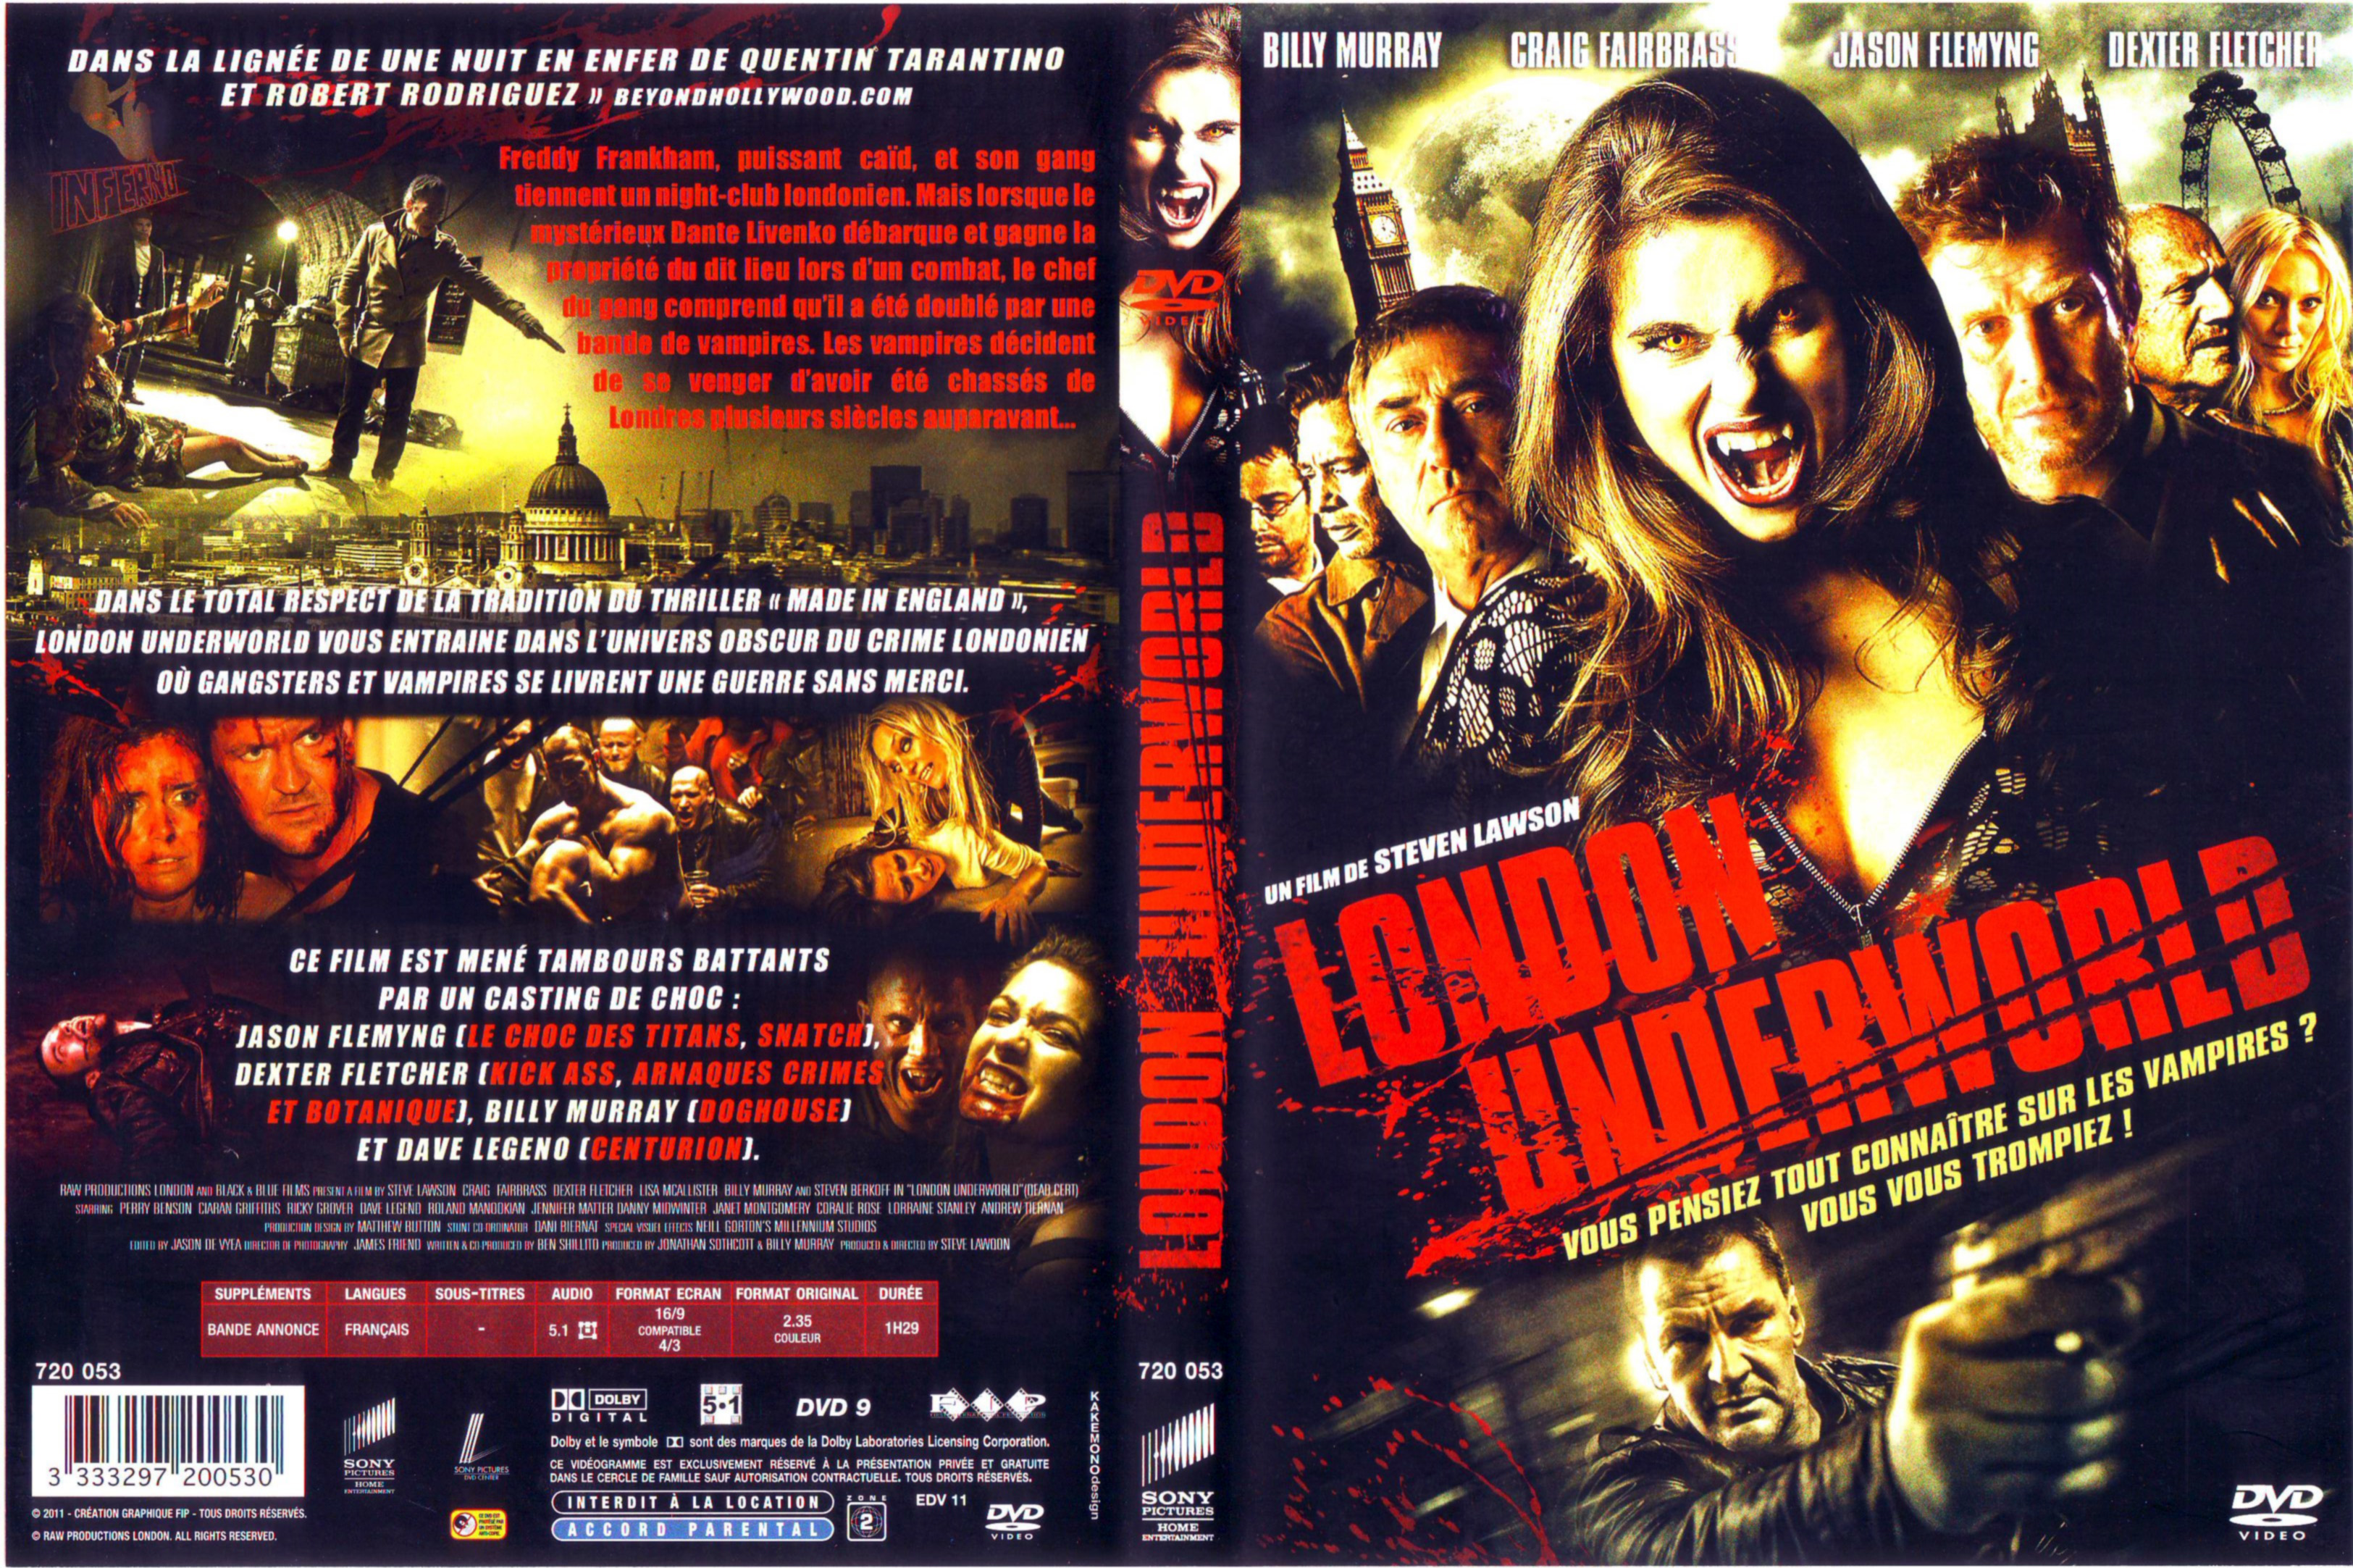 Jaquette DVD London underworld